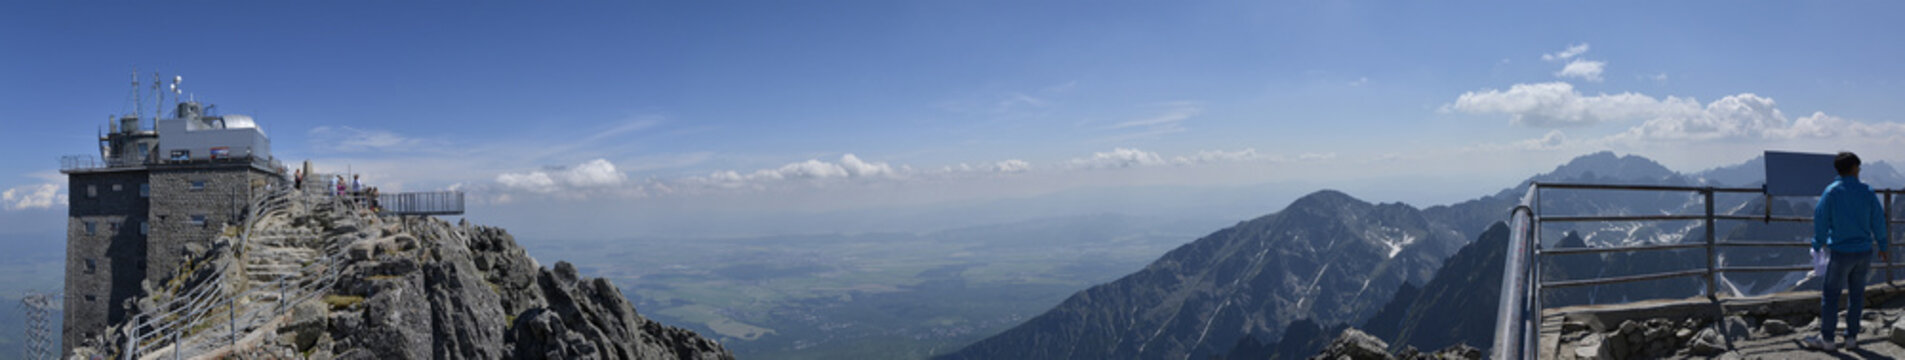 Fototapeta Vysoke Tatry (High Tatras) panorama view